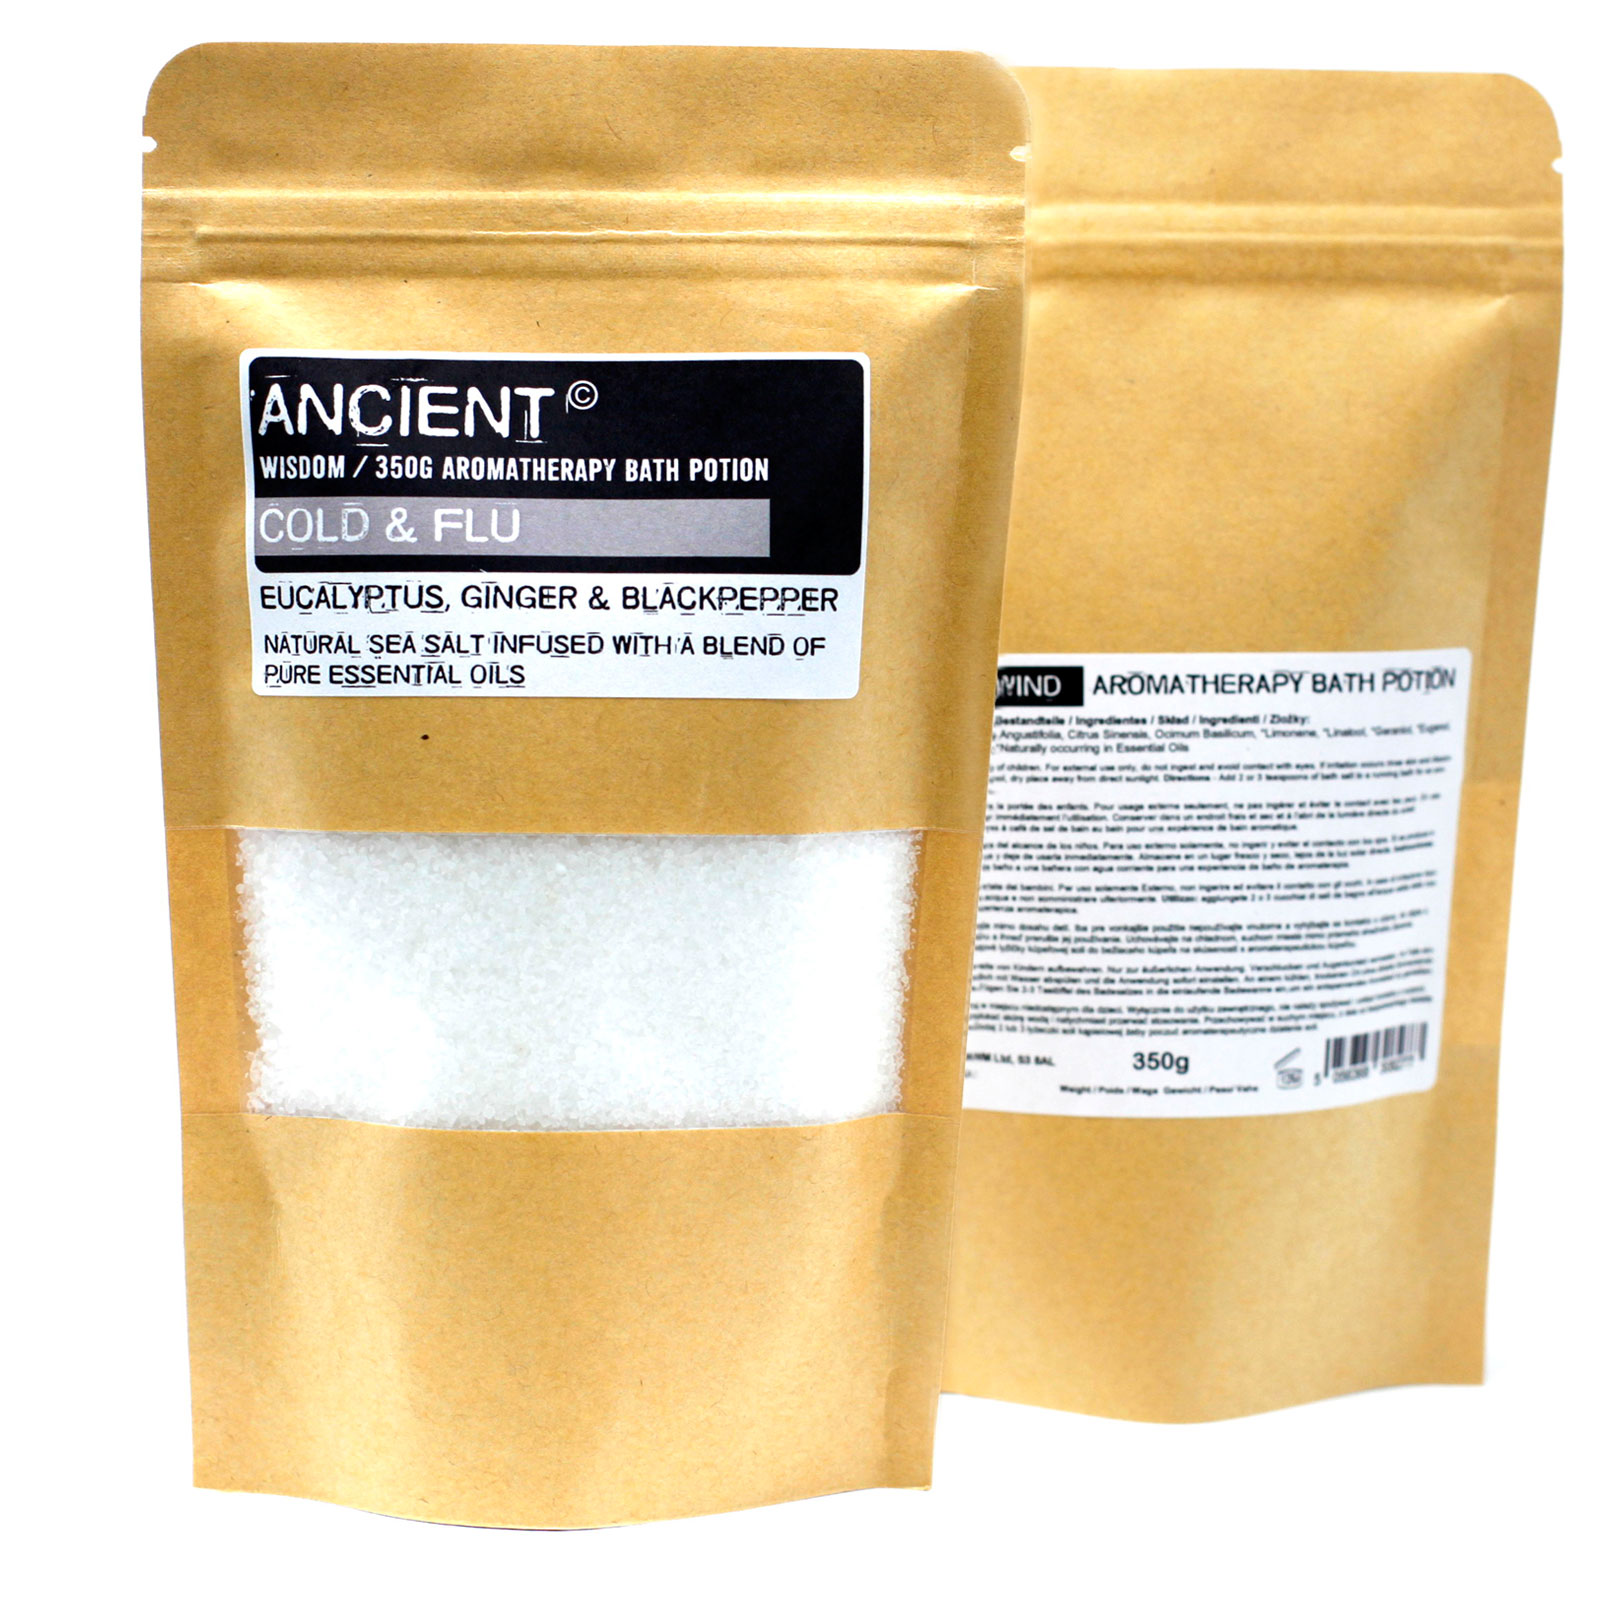 Aromatherapy Bath Potion in Kraft Bag 350g - Colds & Flu